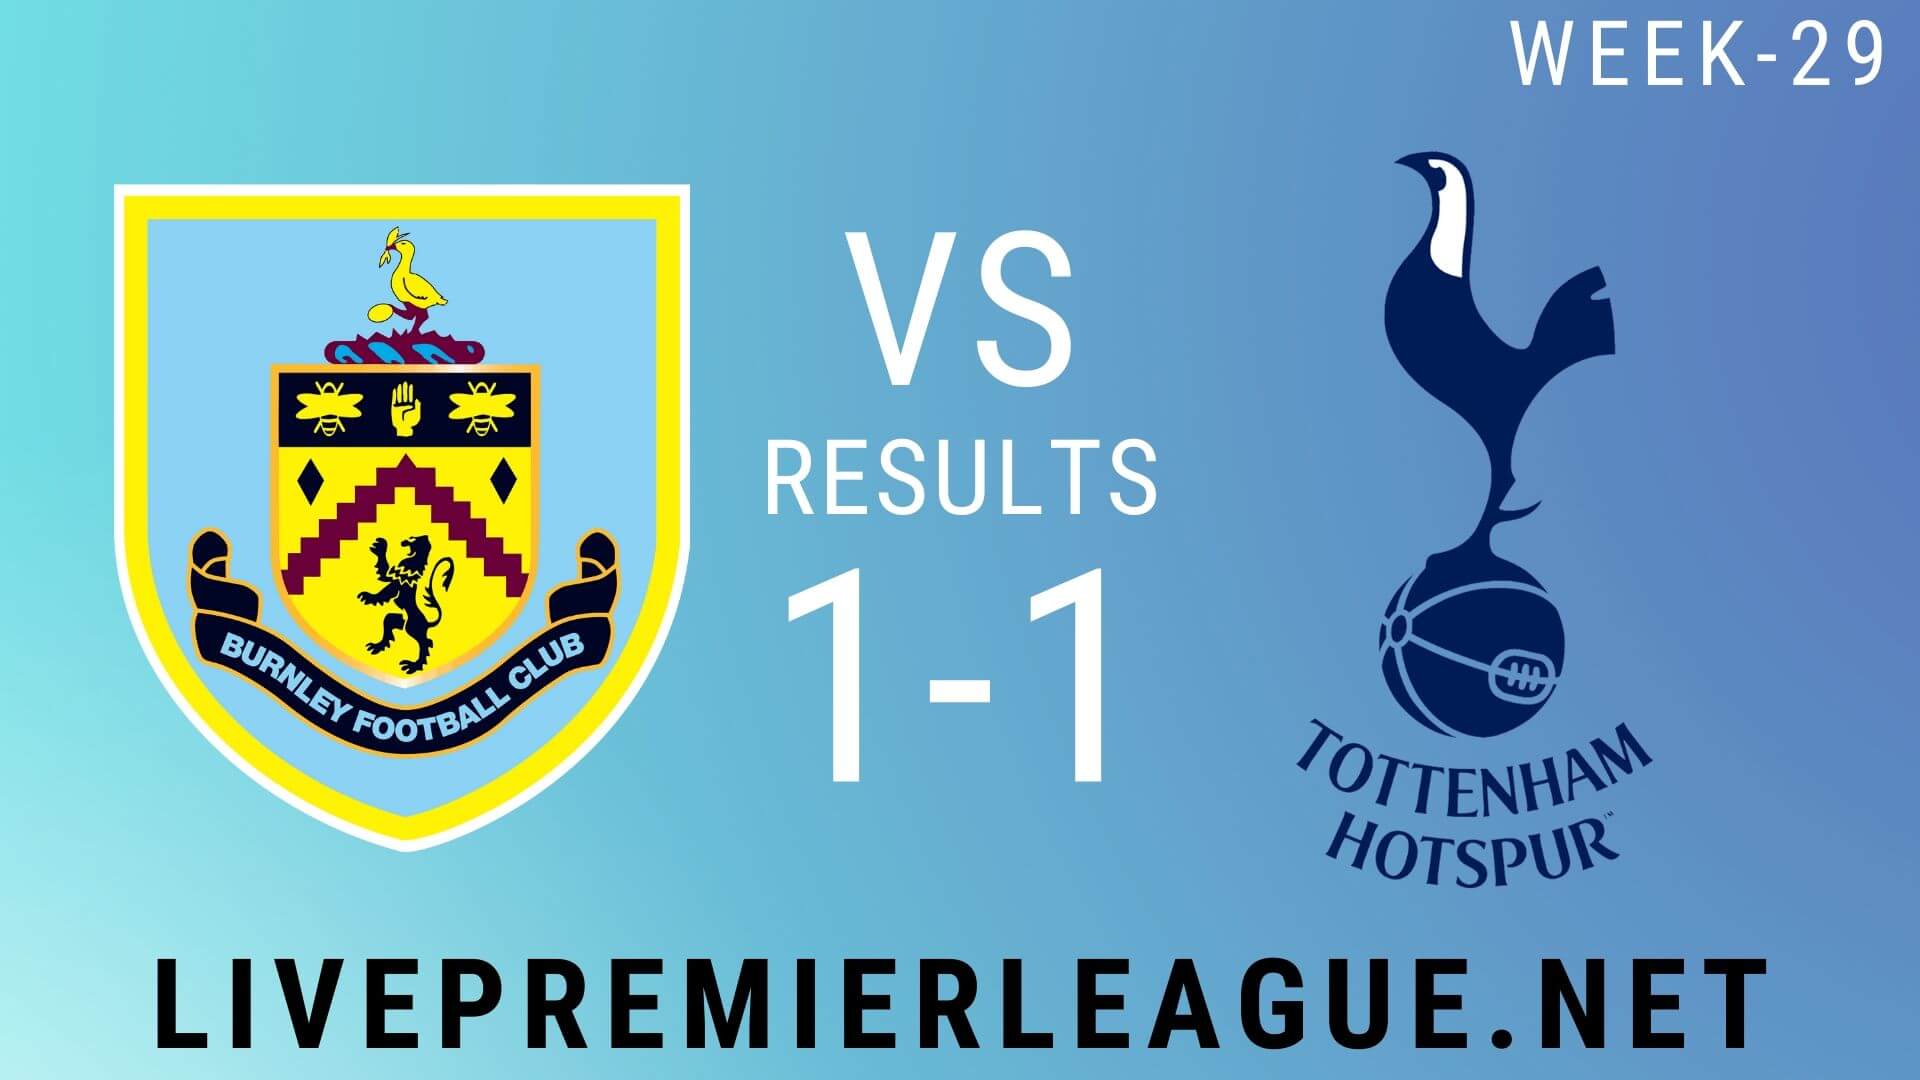 Burnley Vs Tottenham Hotspur | Week 29 Results 2020